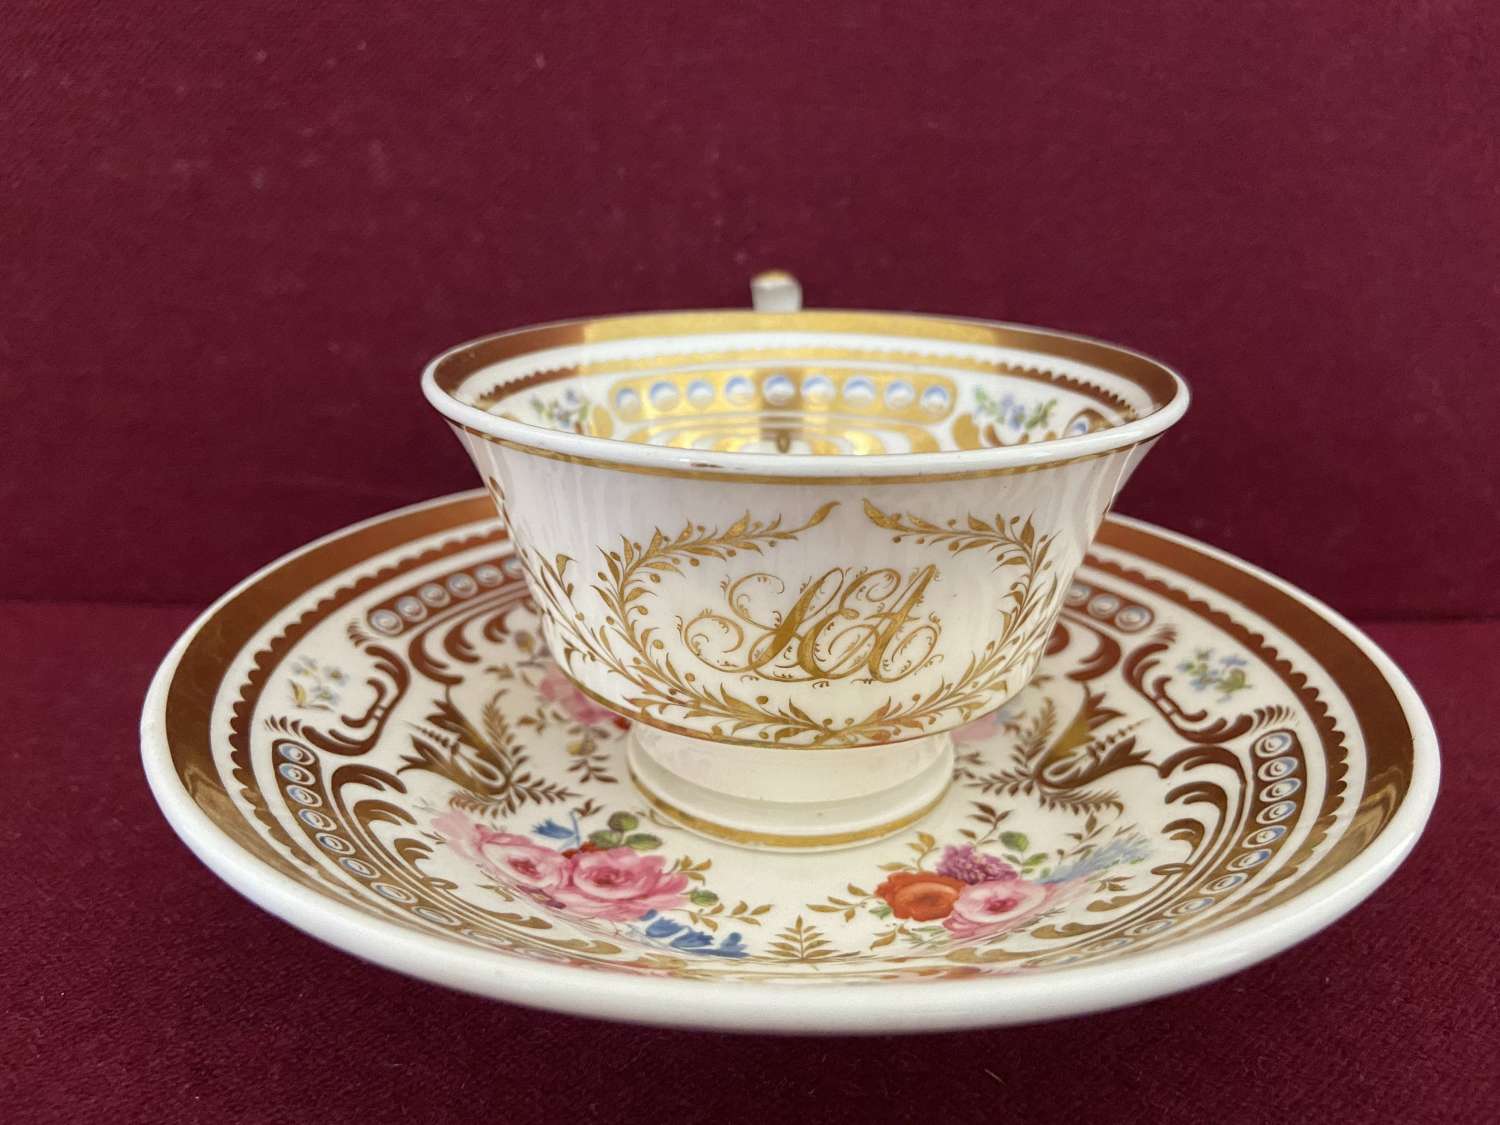 A Coalport porcelain teacup and saucer of 'London' shape c.1815